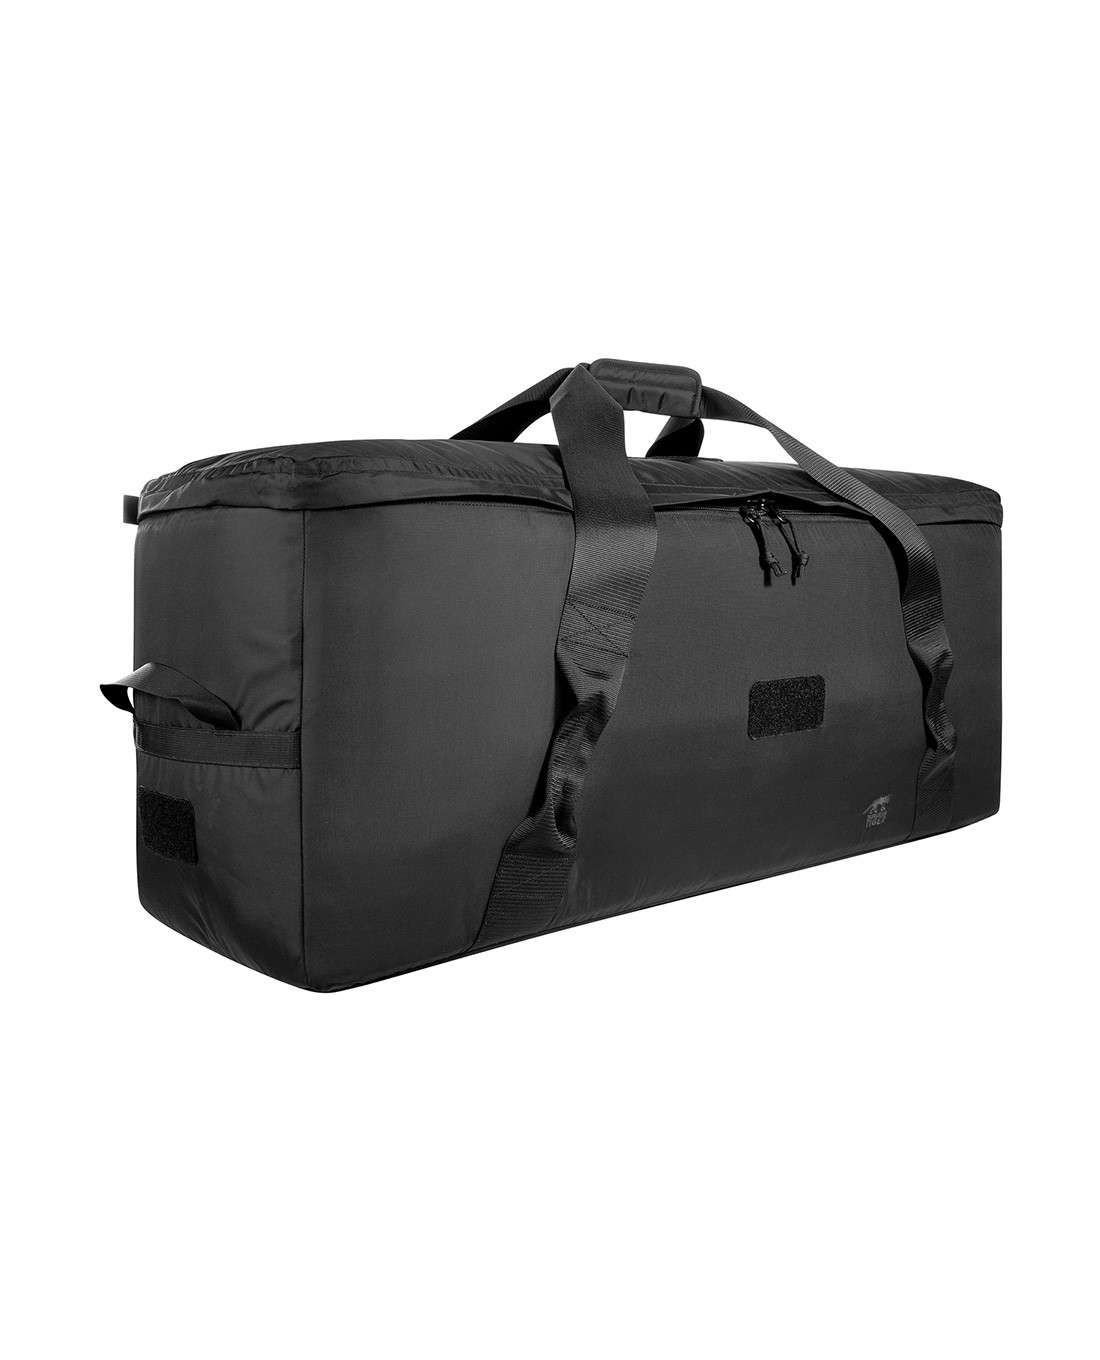 TASMANIAN TIGER TT Gear Bag 100 Black - 7985.040 - TACWRK